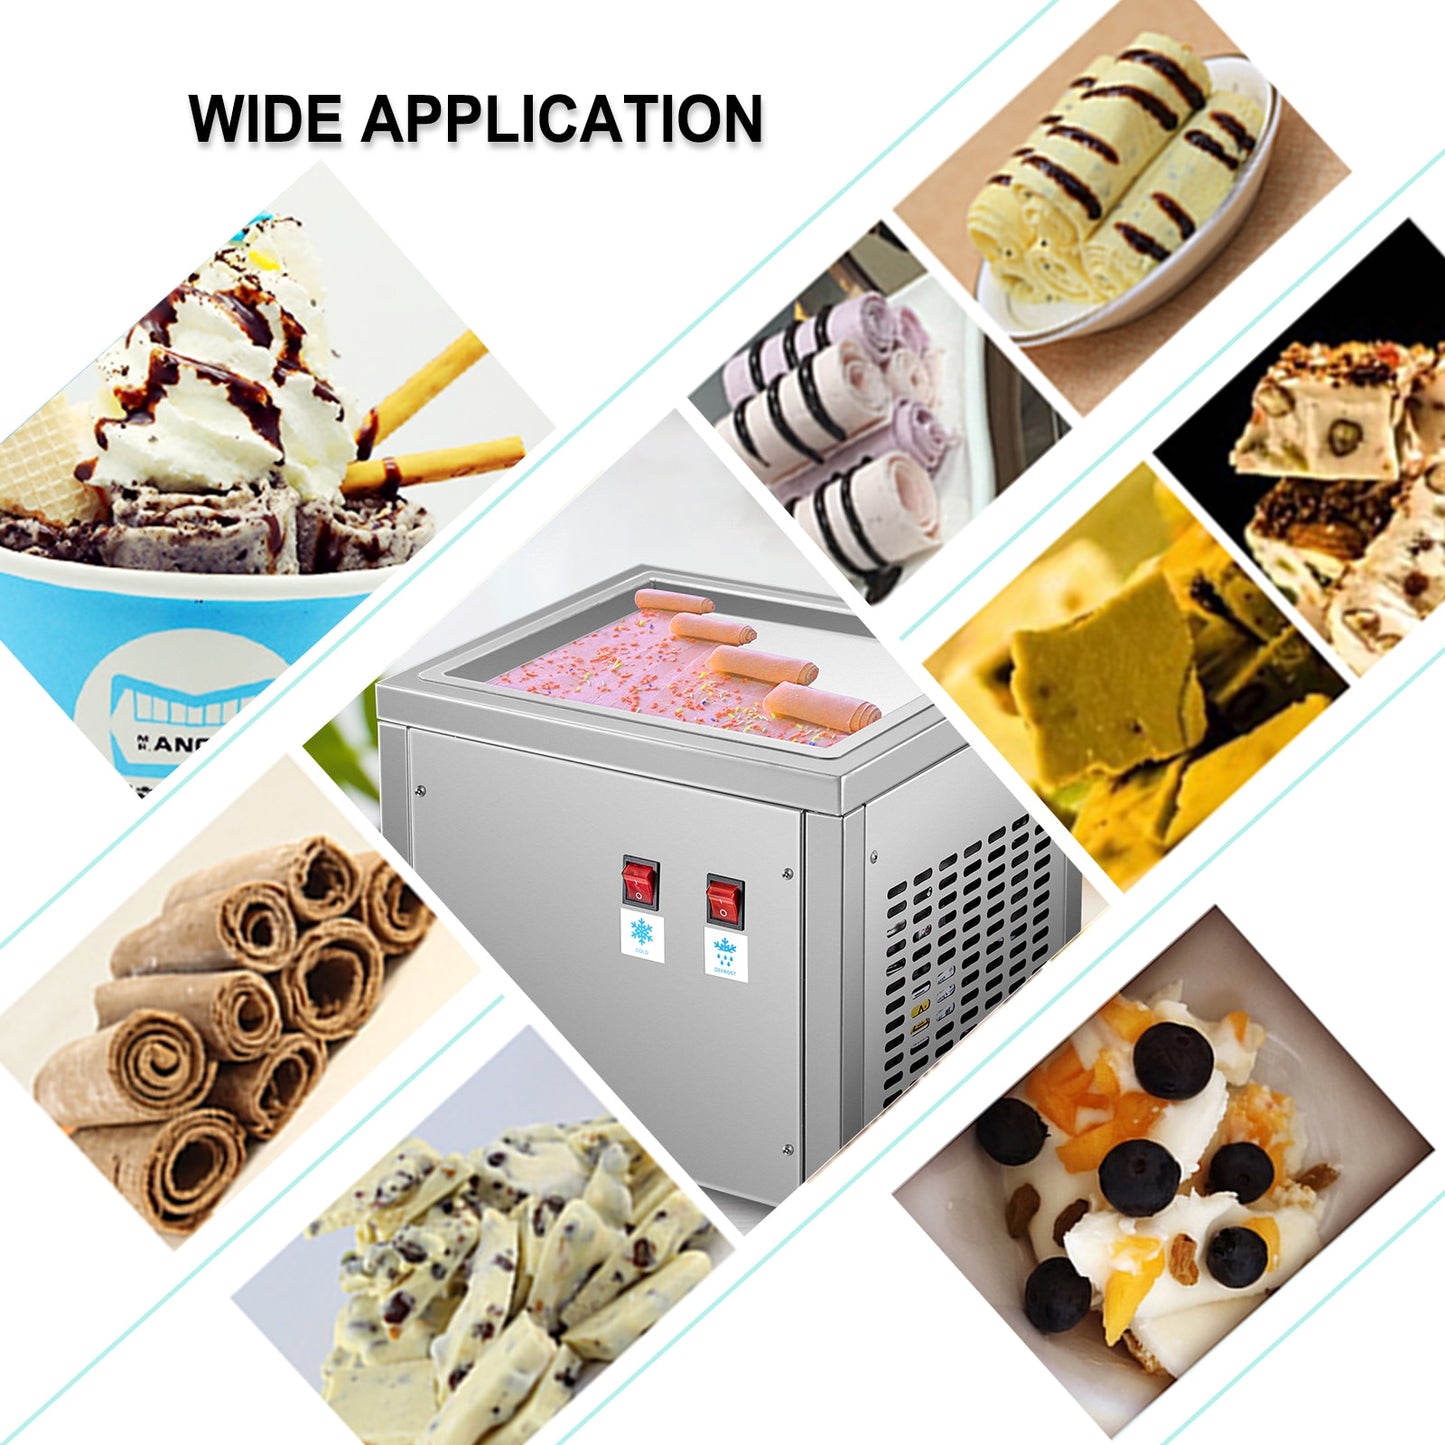 VEVOR 280W Commercial Fried Ice Cream Roll Machine 24 x 28 cm Single Square Pan Stainless Steel Home Ice Cream Porridge Maker